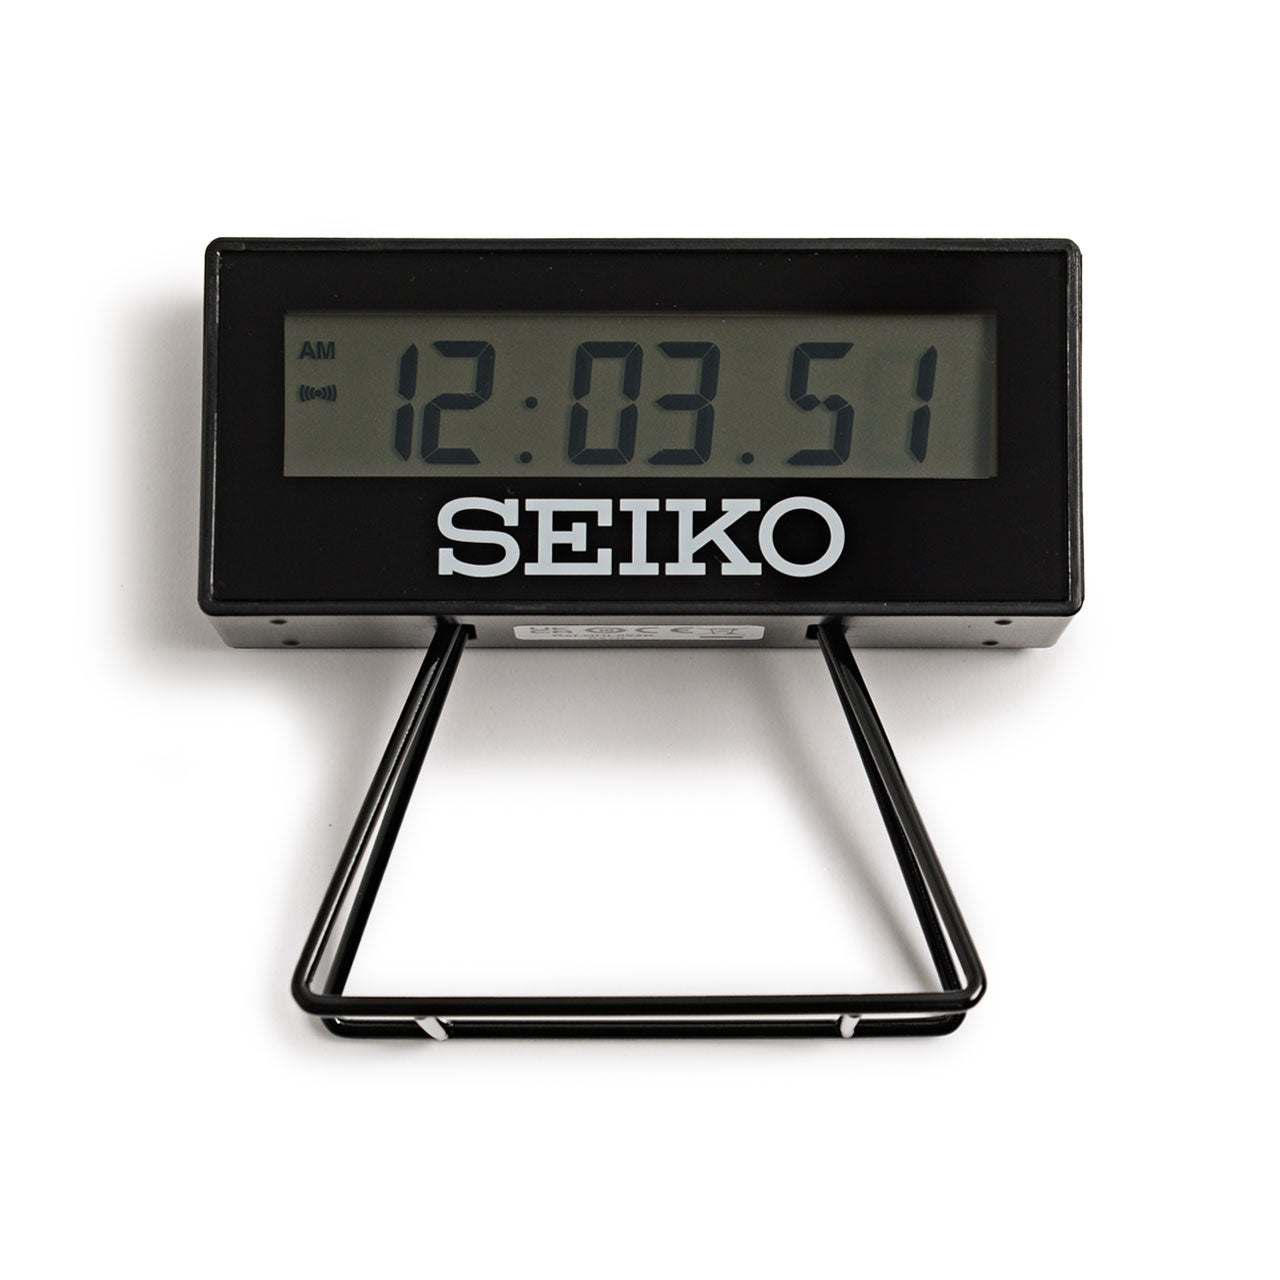 Seiko Victory Limited Edition Marathon Alarm Clock, #Seiko #Victory #Limited #Edition #Marathon #Alarm #Clock